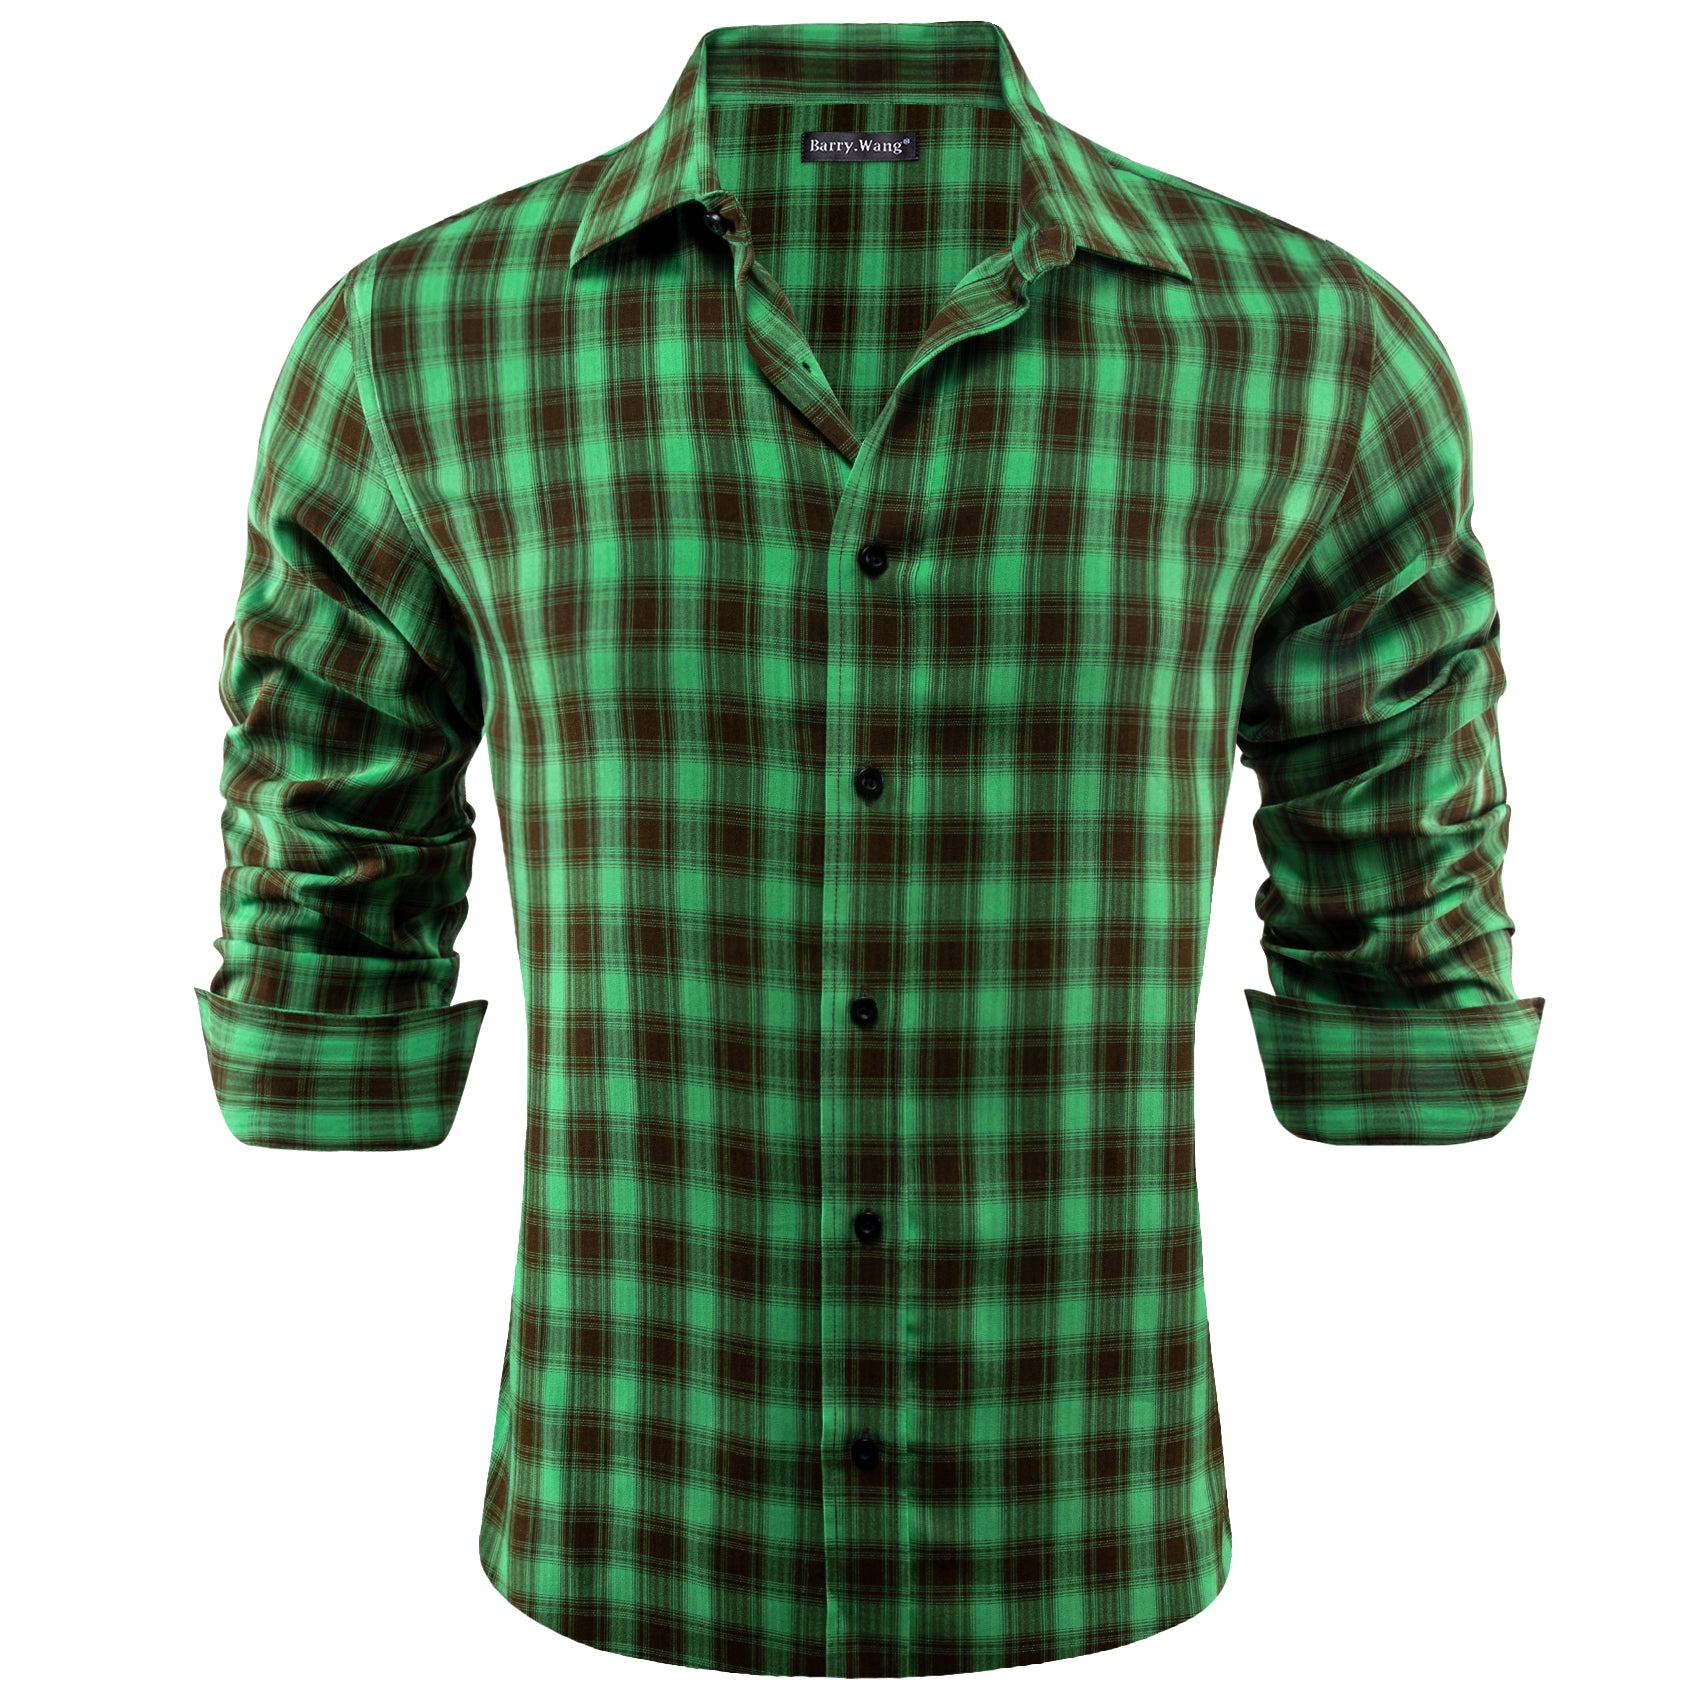  Green Plaid Shirt